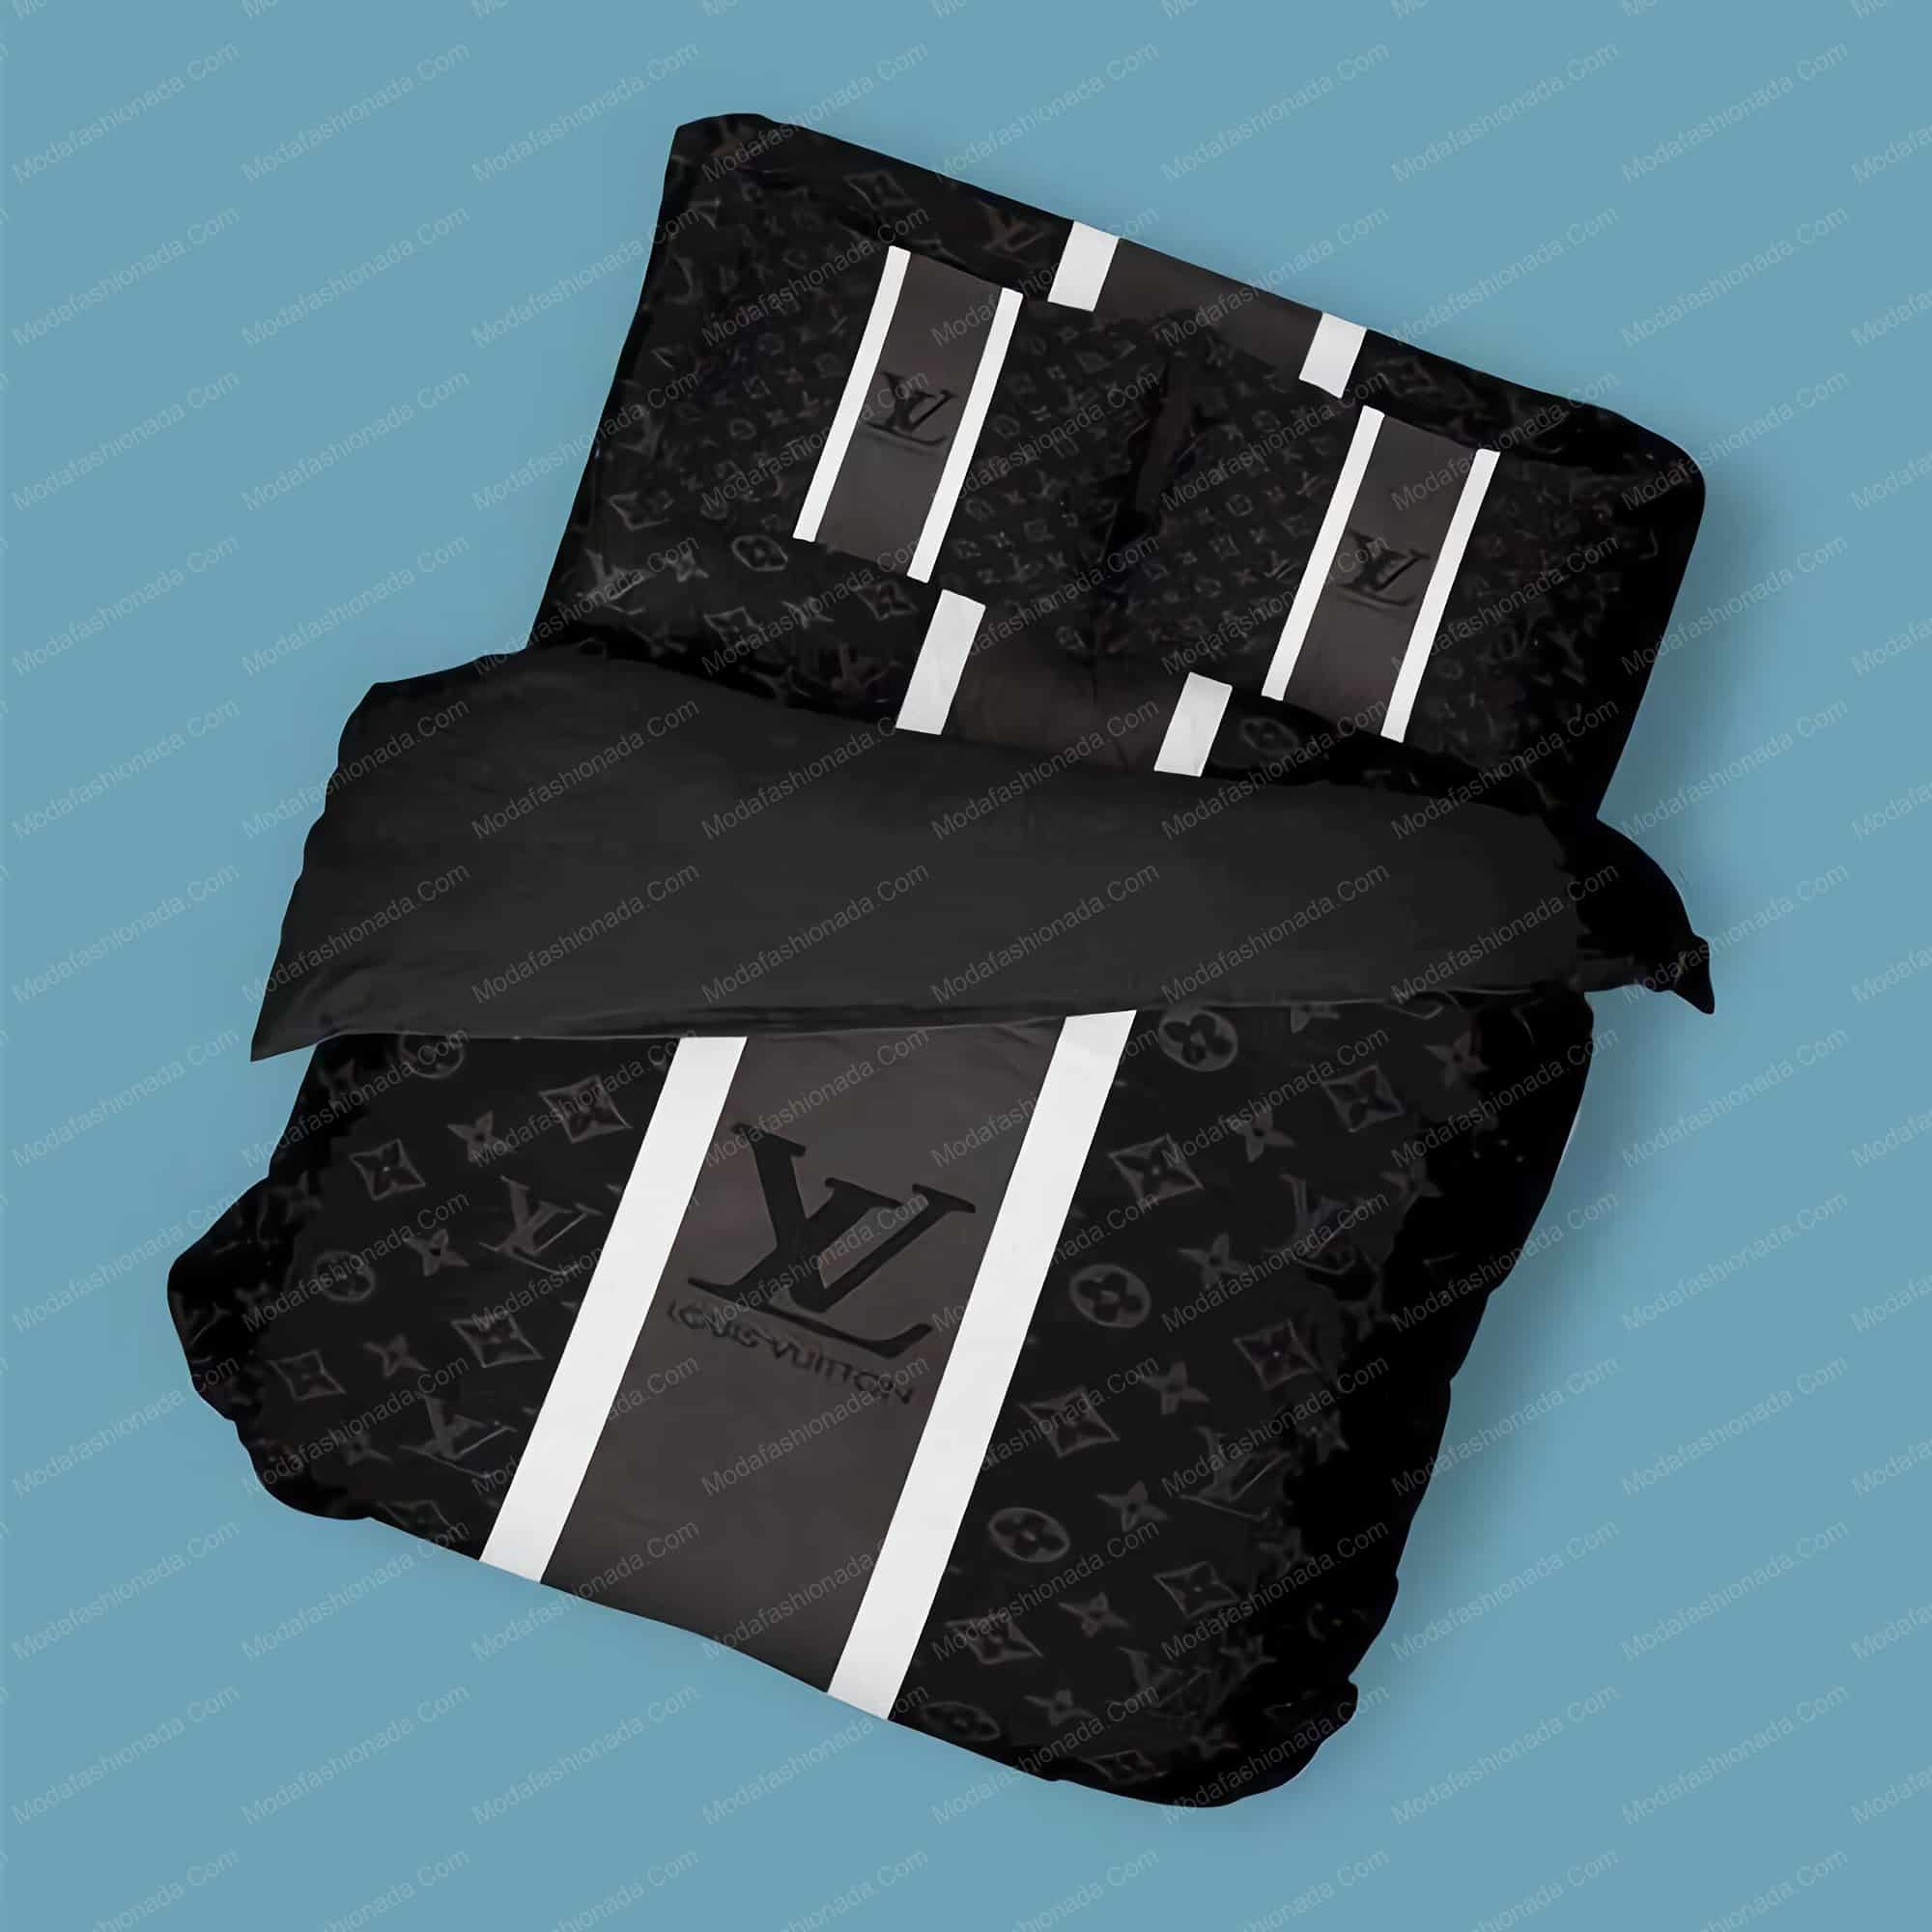 Louis Vuitton Luxury Brands 23 Bedding Set – Duvet Cover – 3D New Luxury – Twin Full Queen King Size Comforter Cover